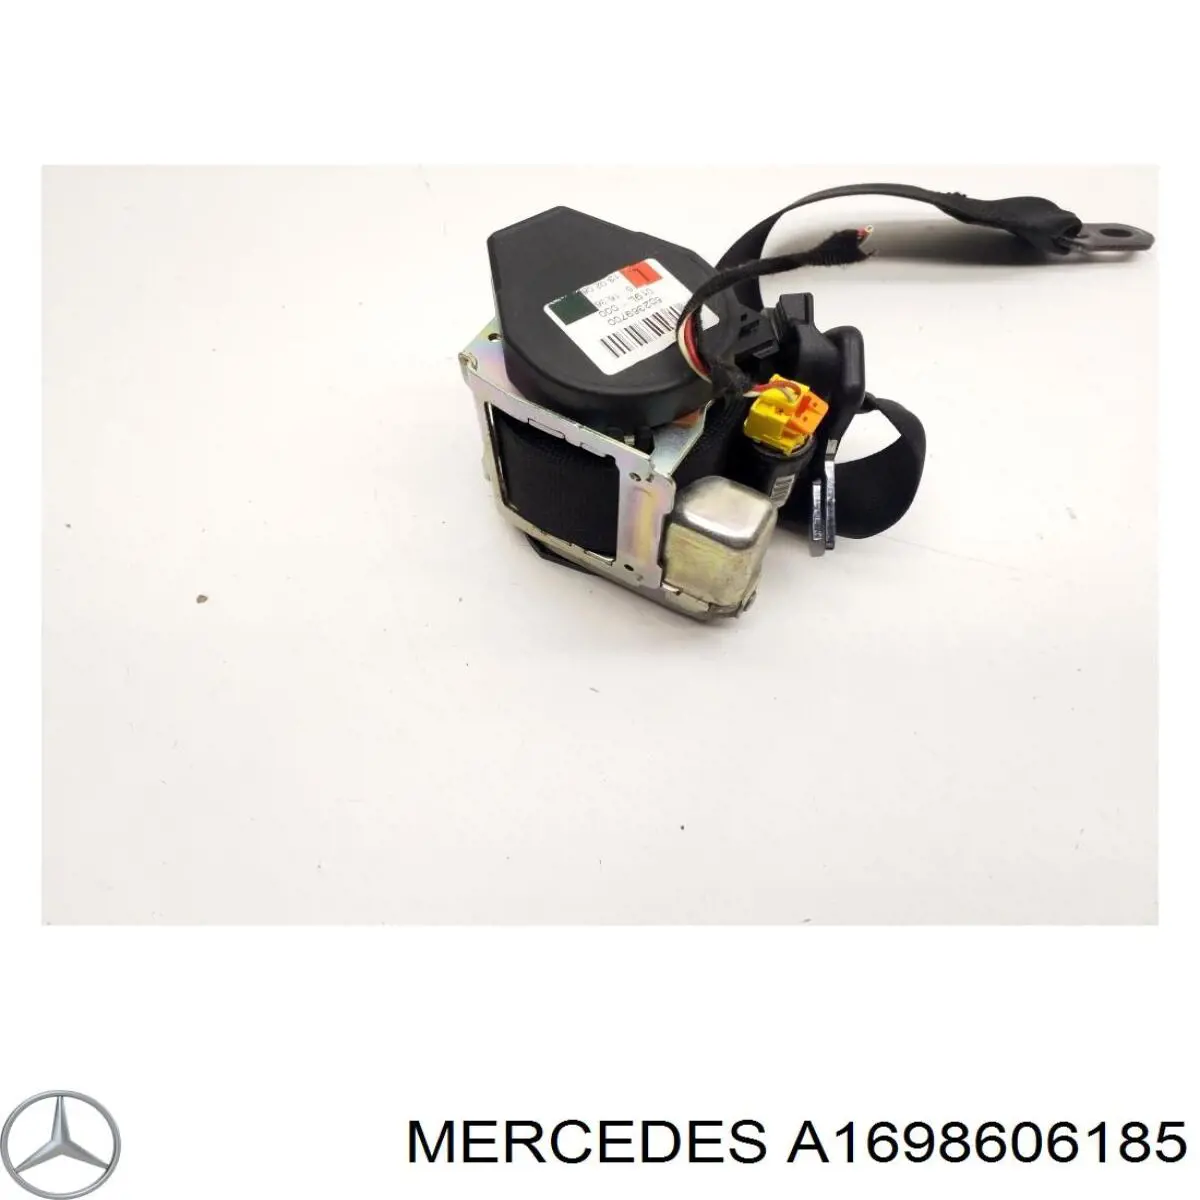 A1698606185 Mercedes